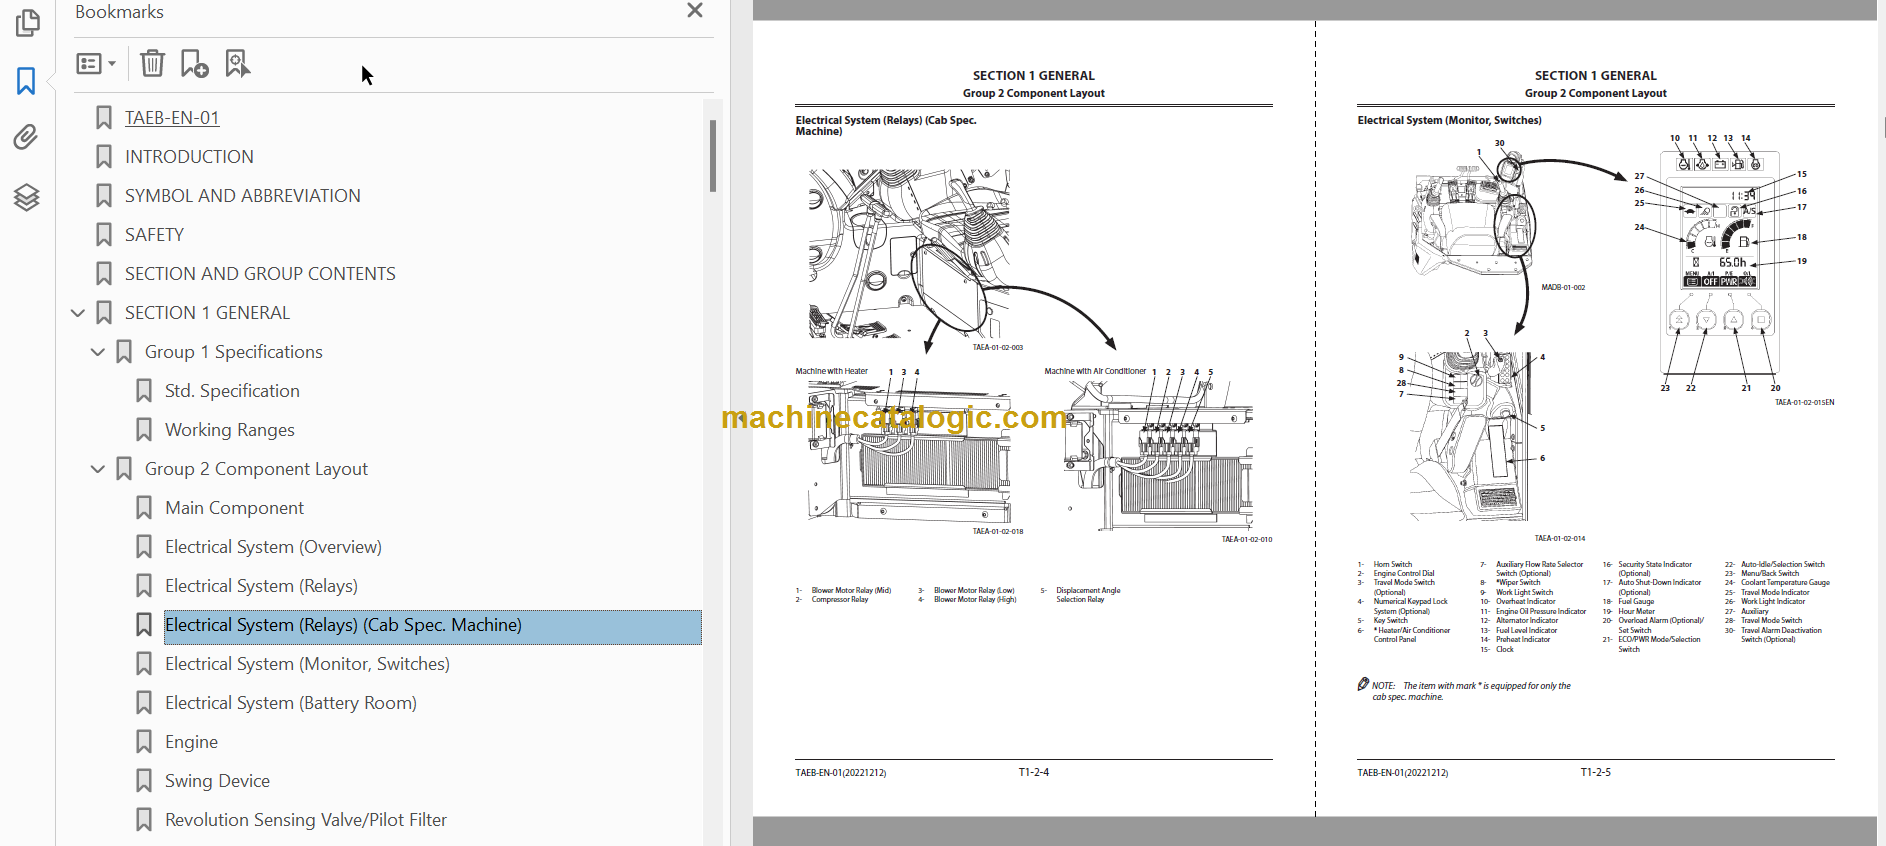 Hitachi ZX55U-5A Hydraulic Excavator Technical and Workshop Manual 